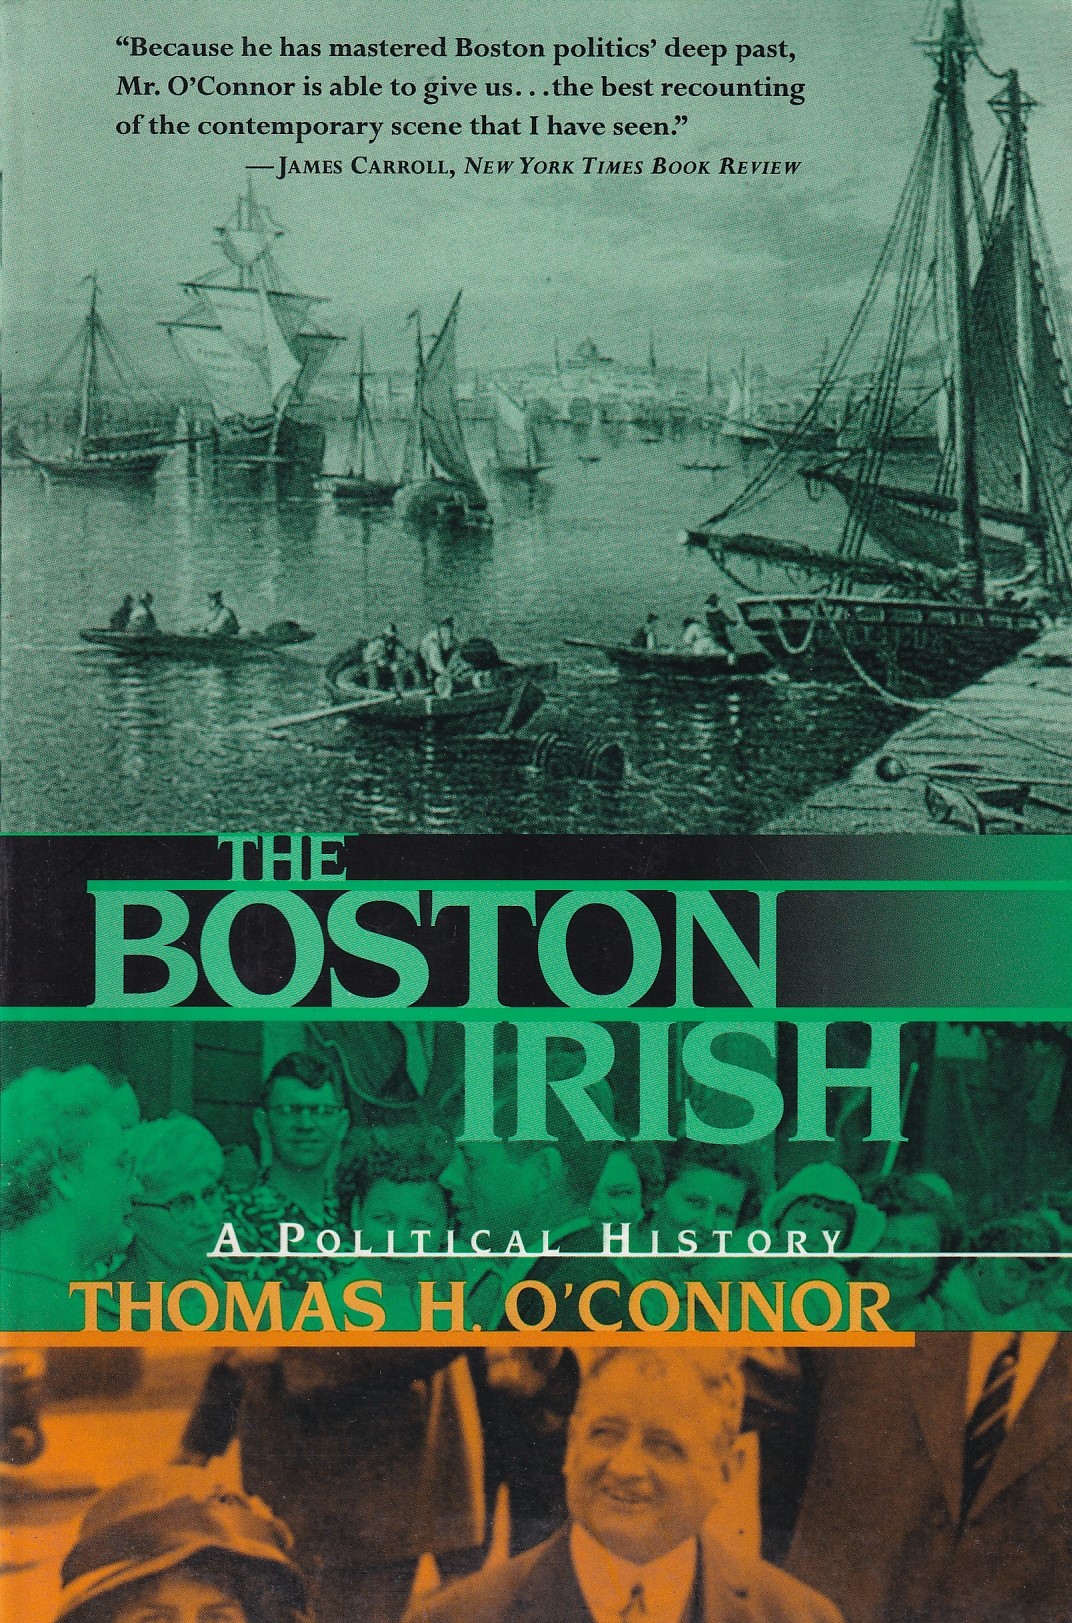 The Boston Irish: A Political History | Thomas H. O'Connor | Charlie Byrne's